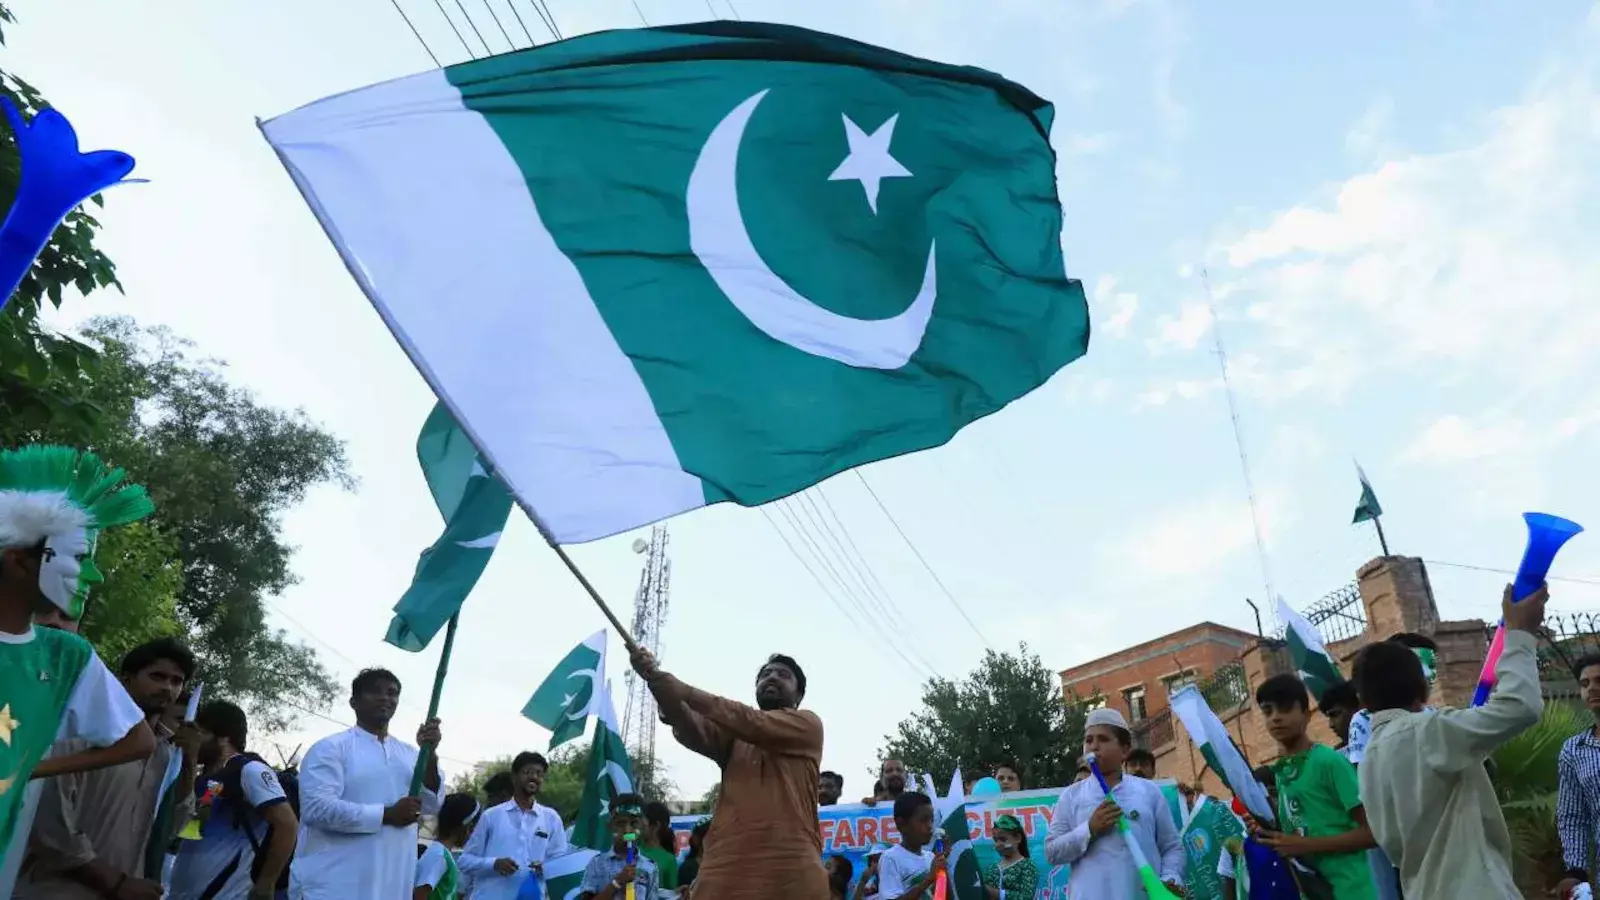 Pakistani military rigging elections to prop up its candidate despite Imran Khan-backed candidates winning polls: Congressman Khanna